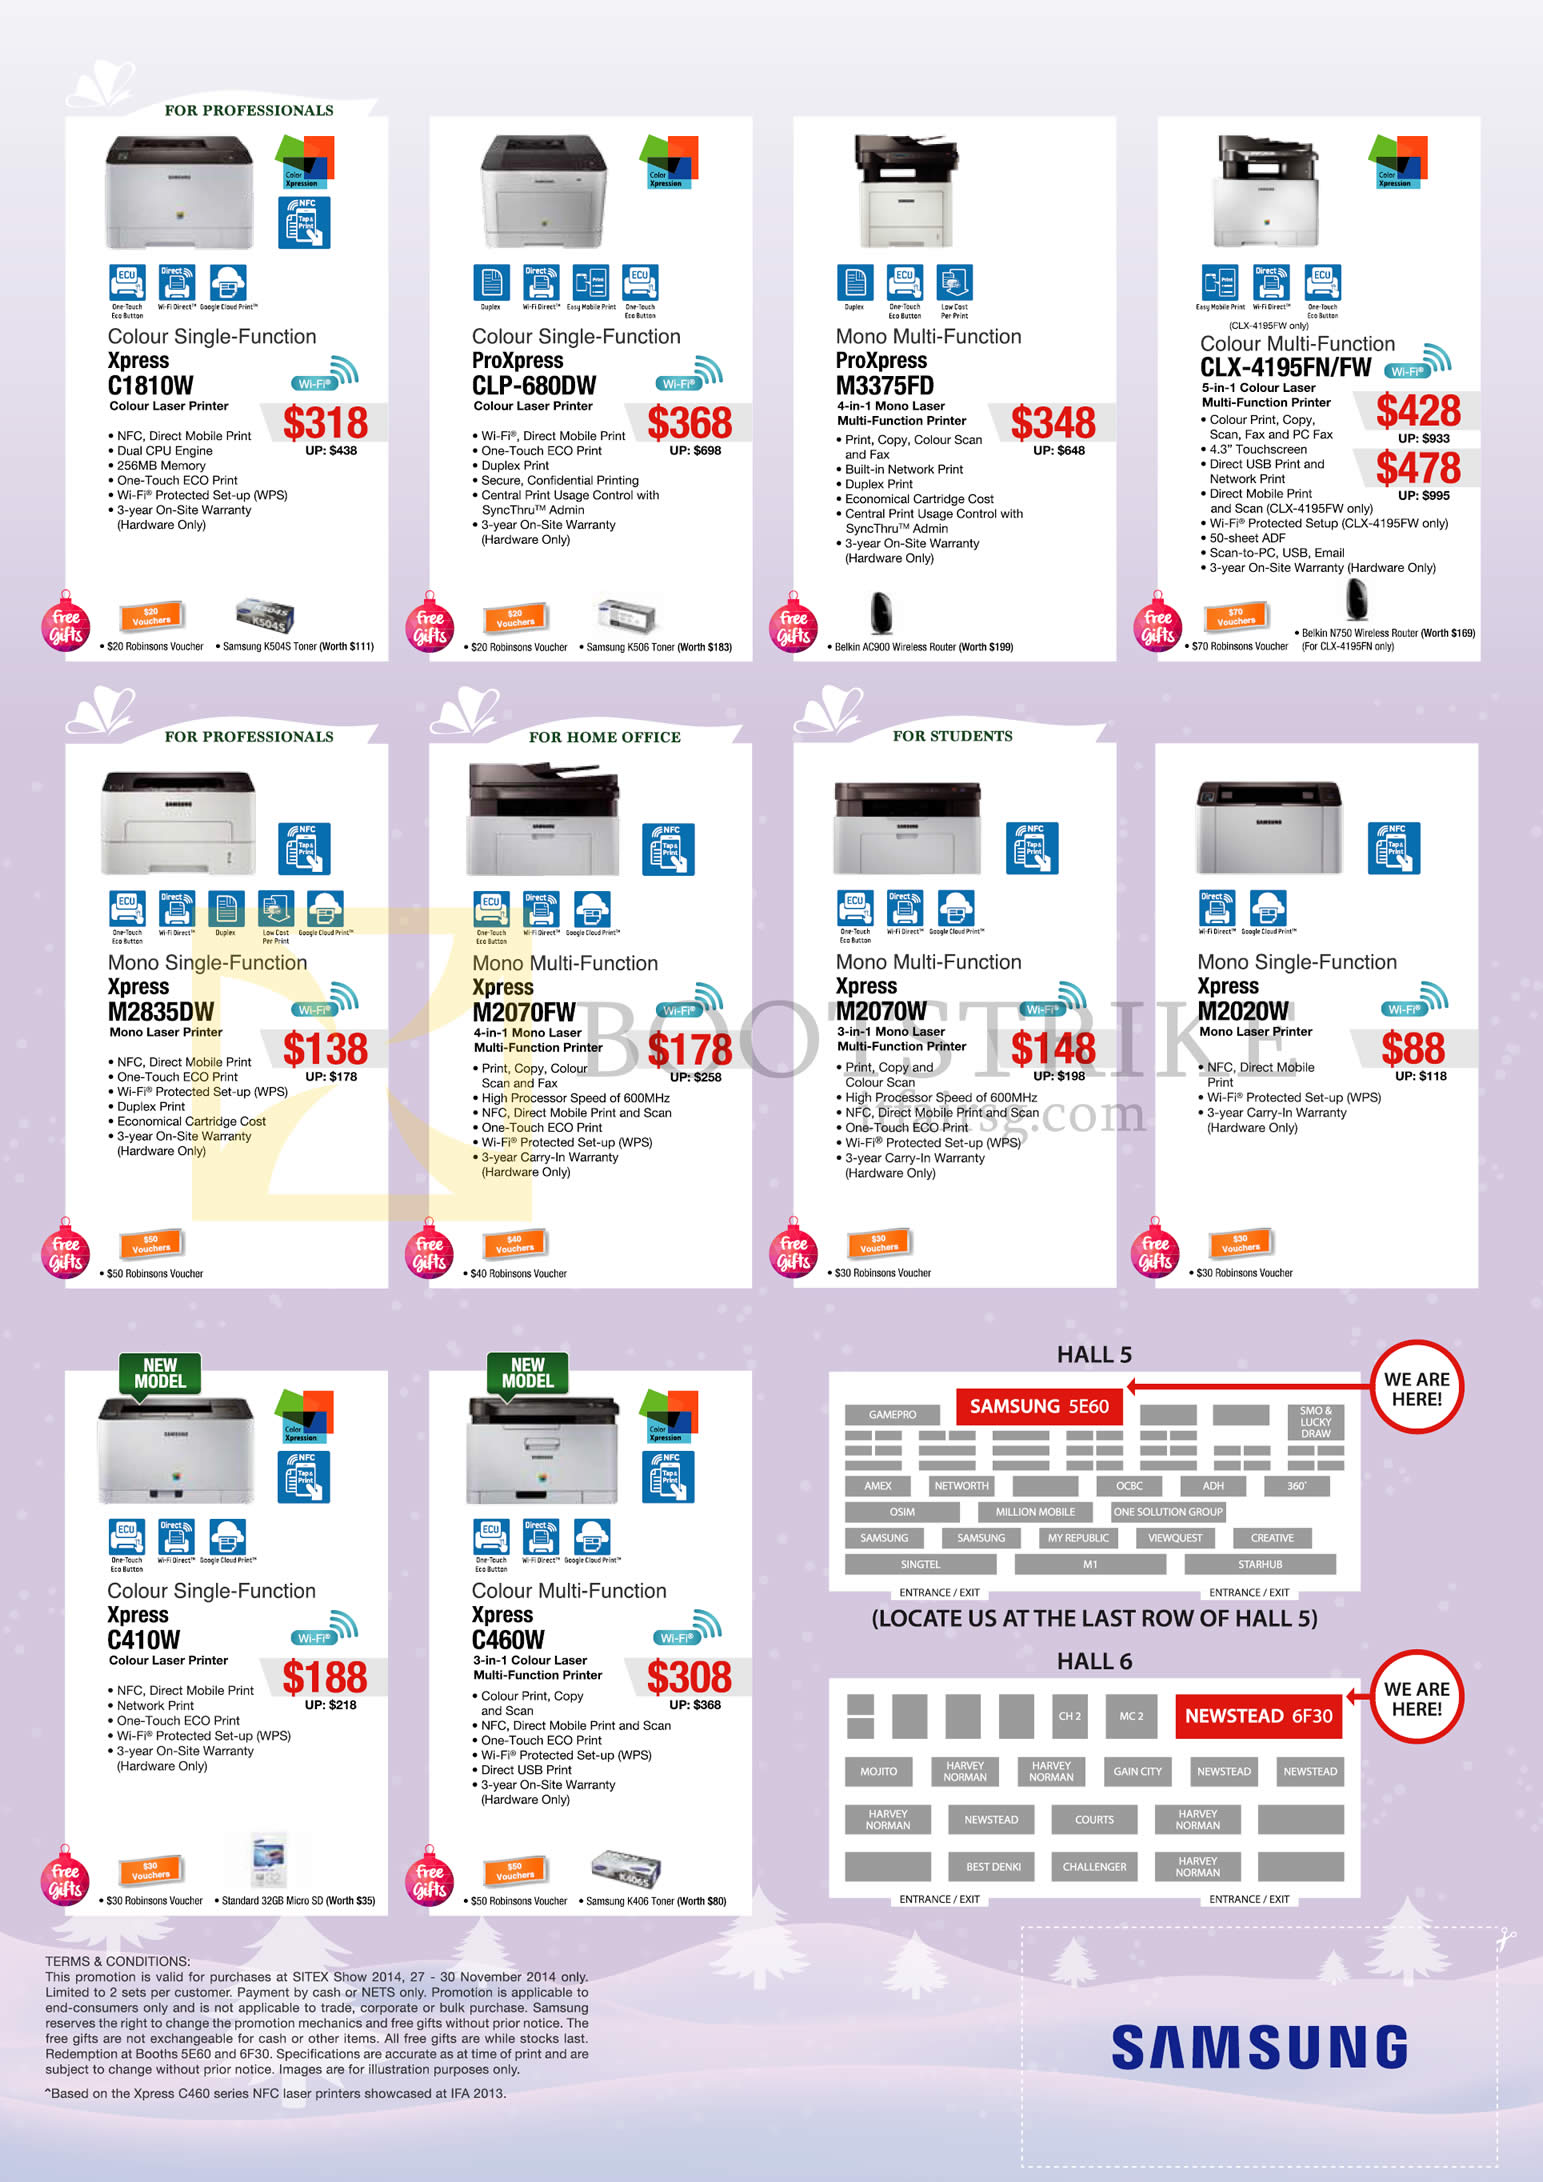 SITEX 2014 price list image brochure of Samsung Printers Laser Xpress C1810W, M2835DW, M2070FW, M2020W, C410W, C460W, ProXpress CLP-680DW, M3375FD, CLX-4195FN, FW